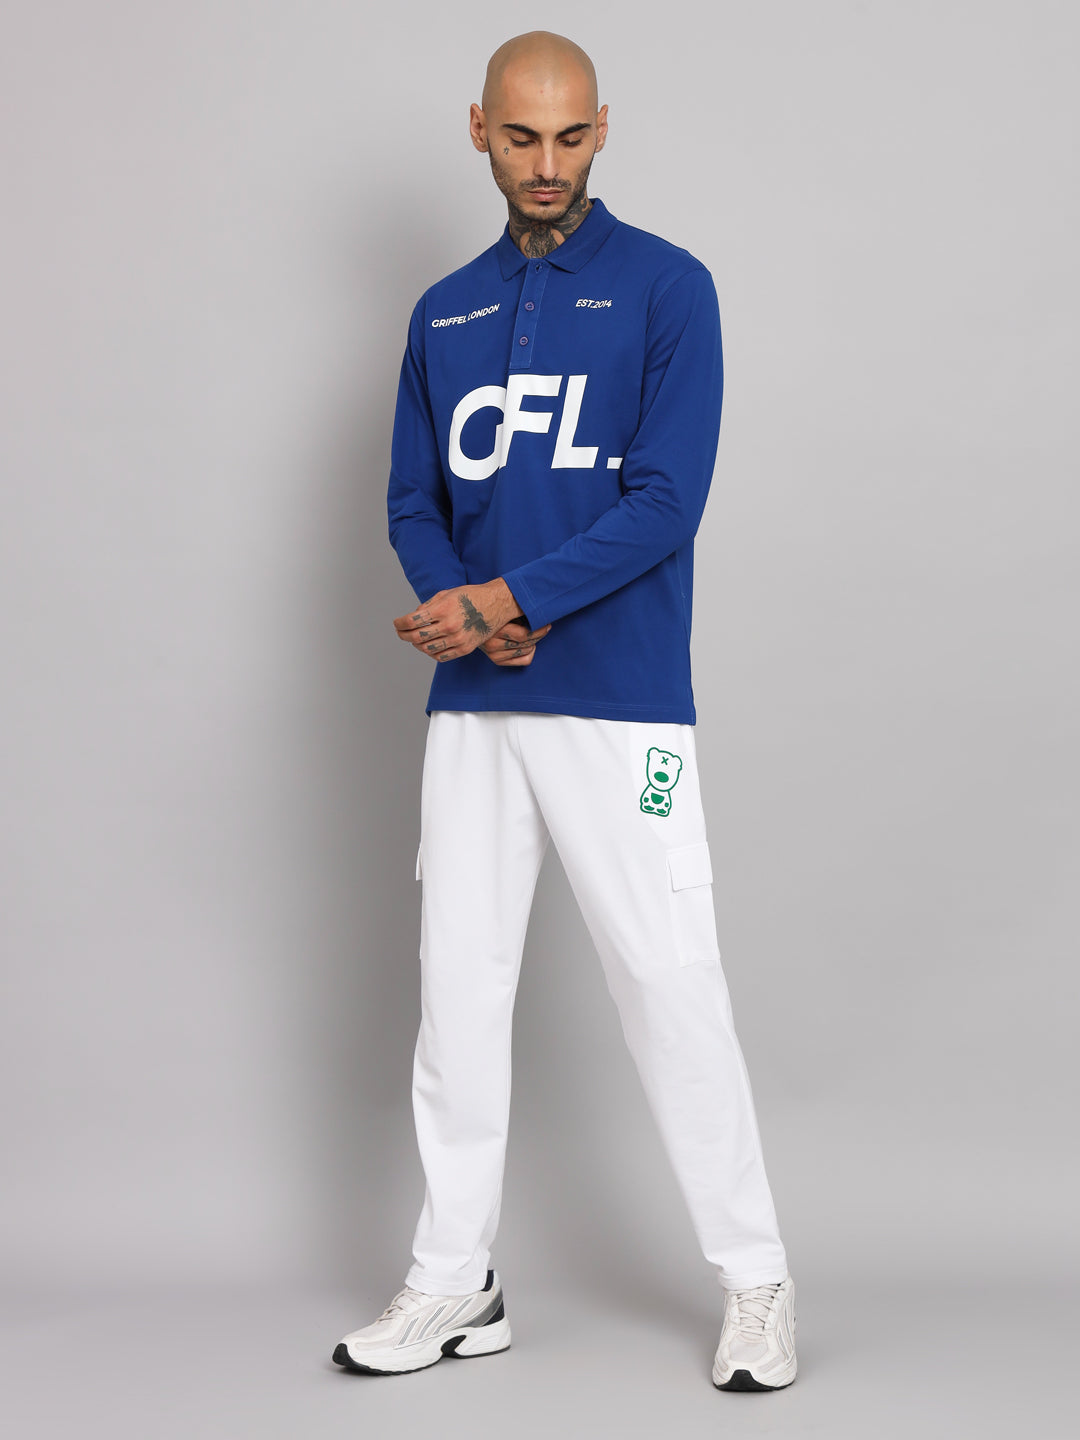 GRIFFEL Men's Royal GFL Printed Cotton Full Sleeve Polo T-shirt